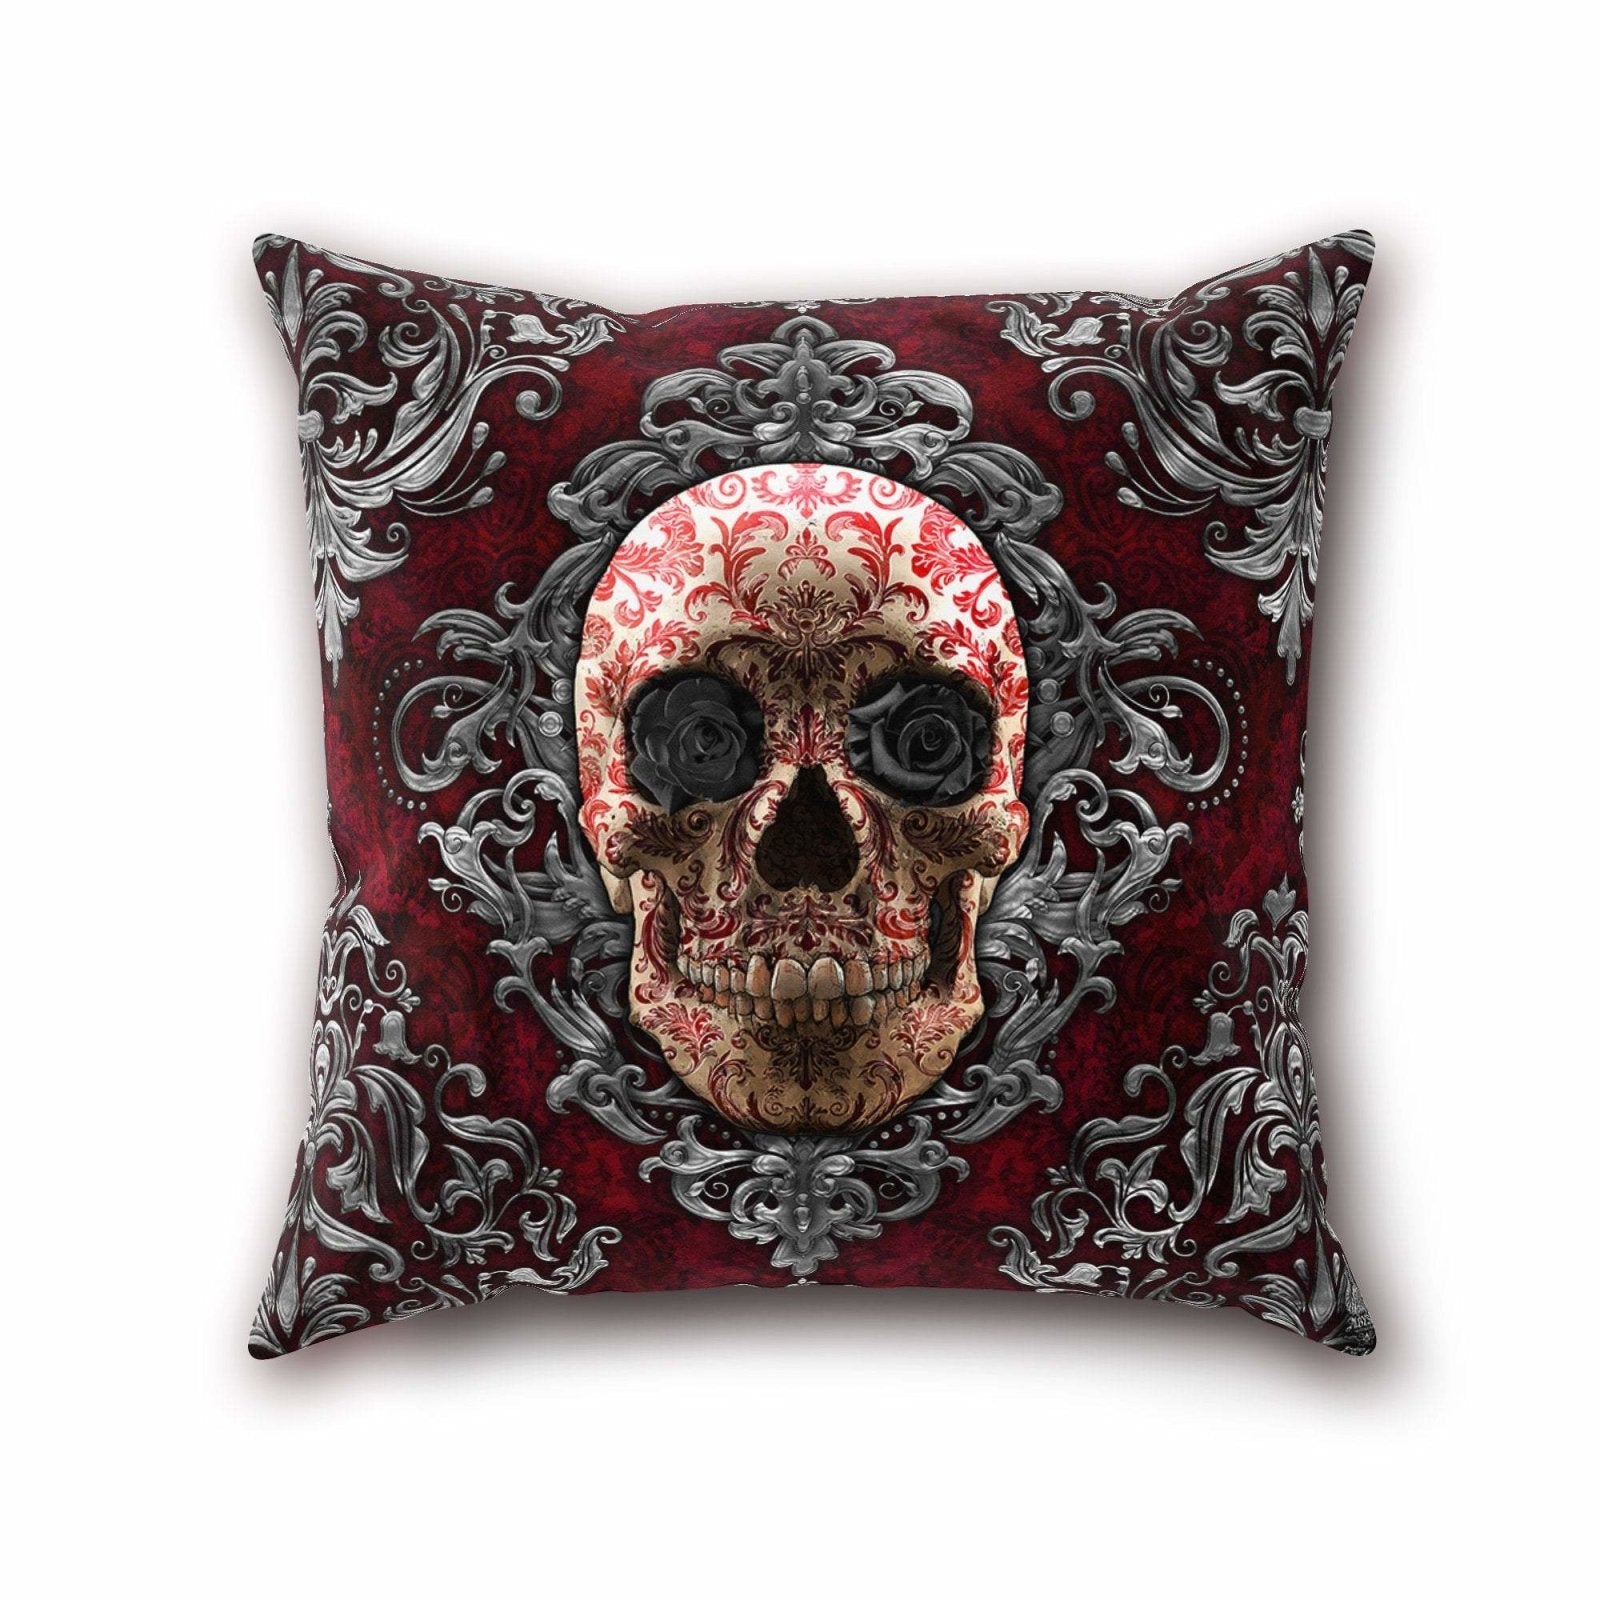 Gothic Skull Throw Pillow, Decorative Accent Cushion, Goth Decor, Macabre Art, Alternative Home - Black Roses - Abysm Internal